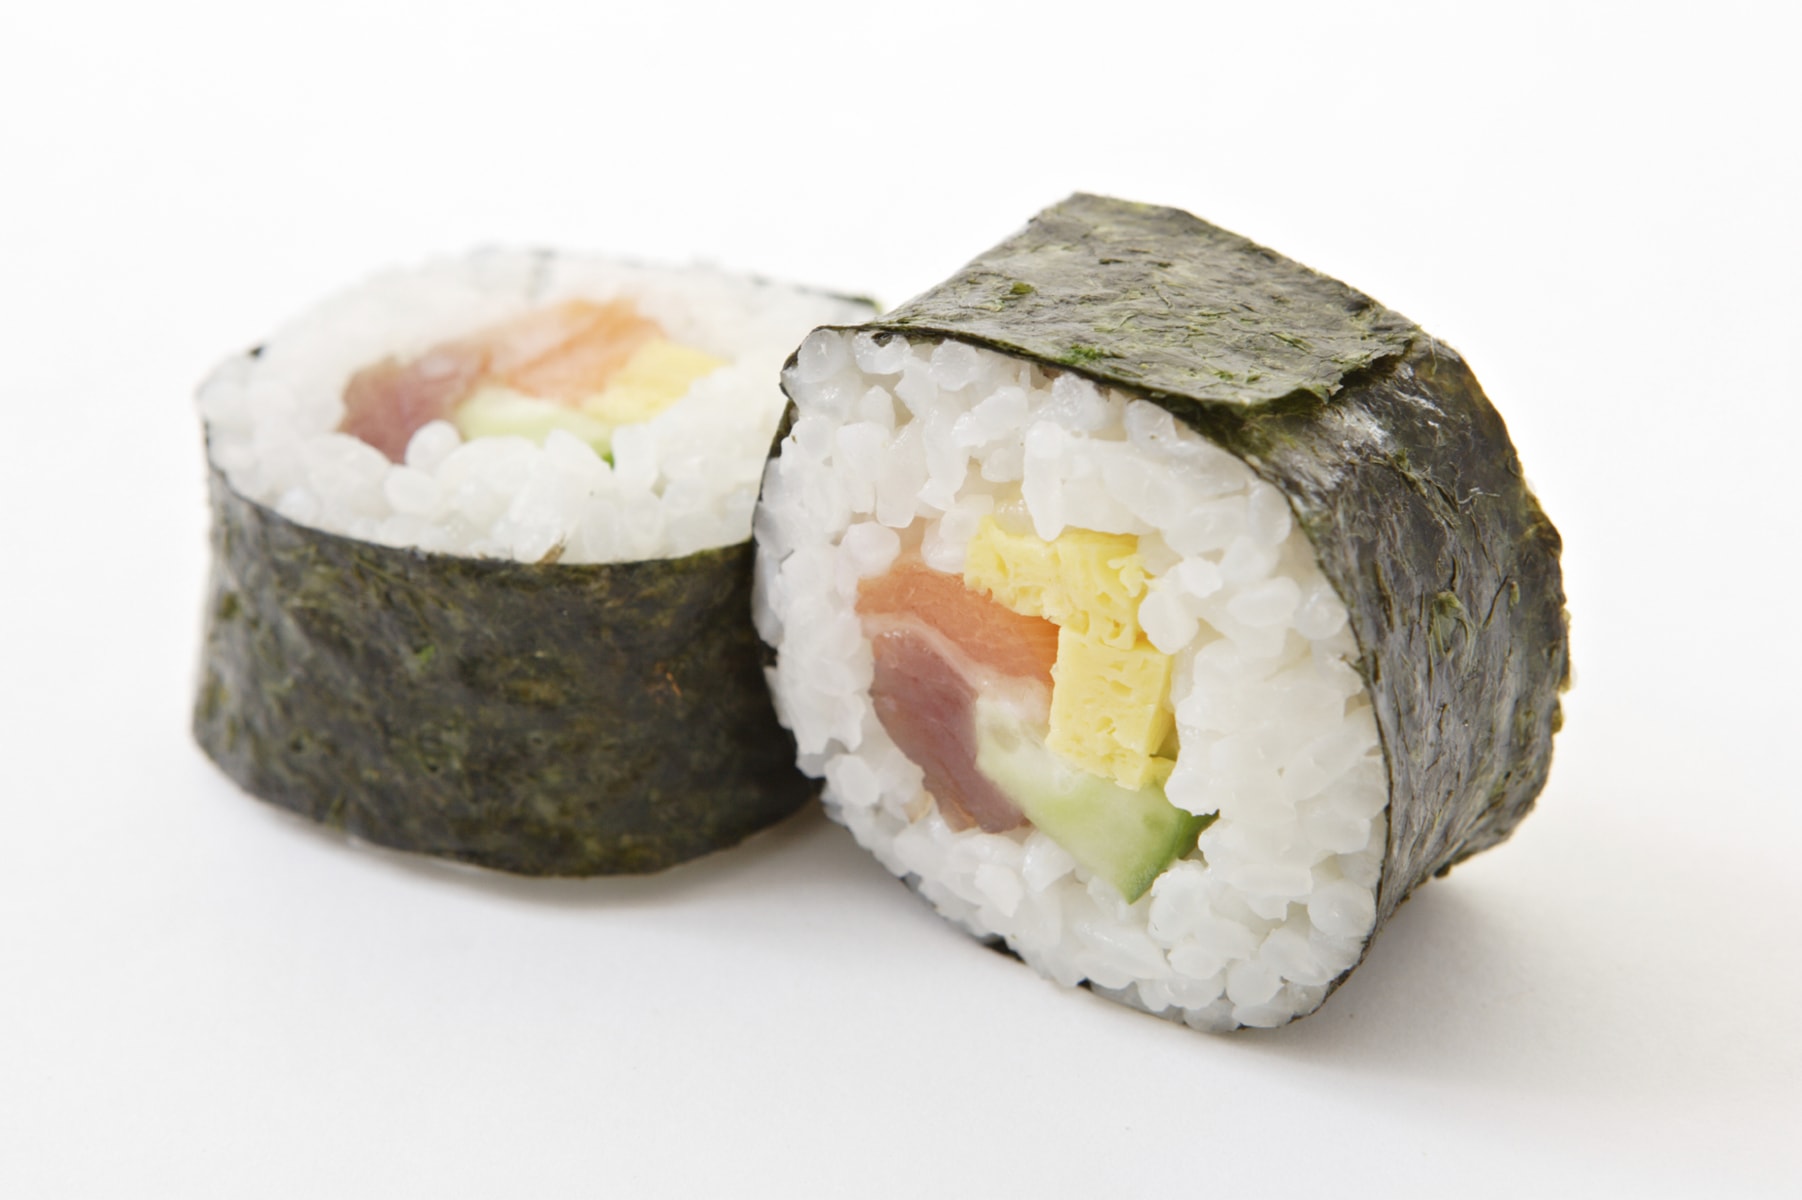 https://media.healthyfood.com/wp-content/uploads/2017/03/Sushi_in_10_steps.jpg